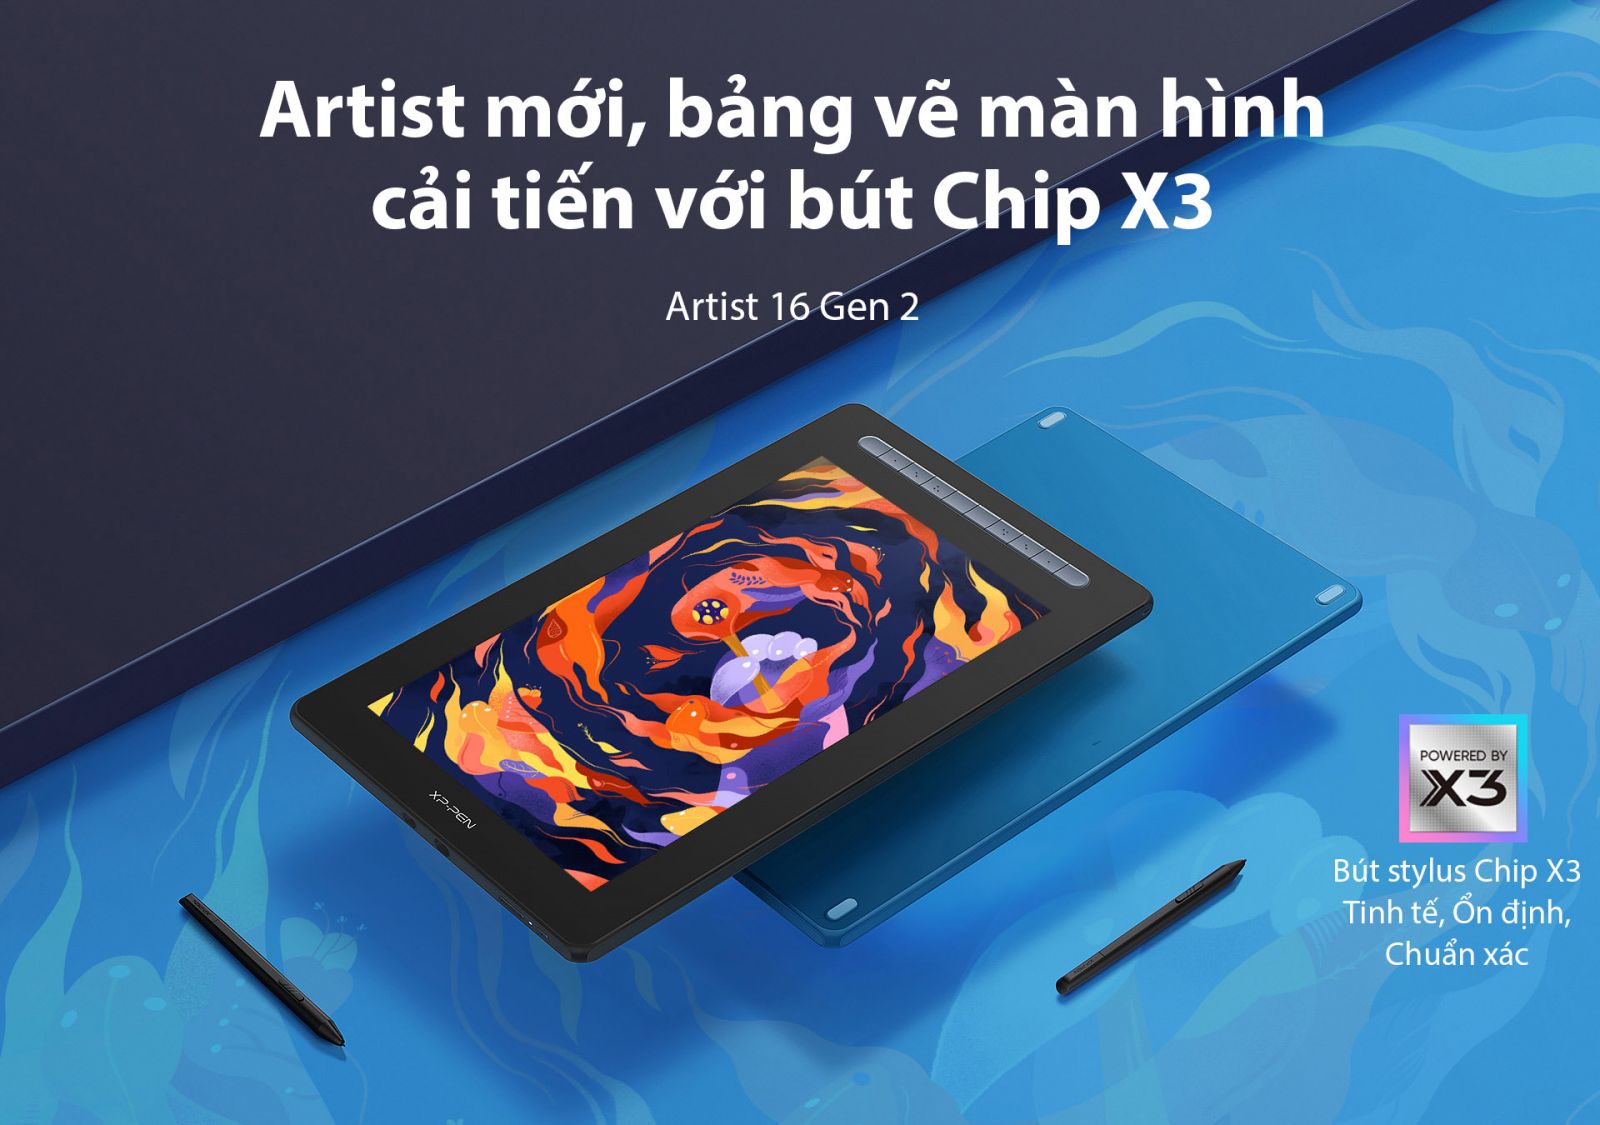 Bảng vẽ màn hình XP-Pen Artist 16 Gen 2 Chip X3